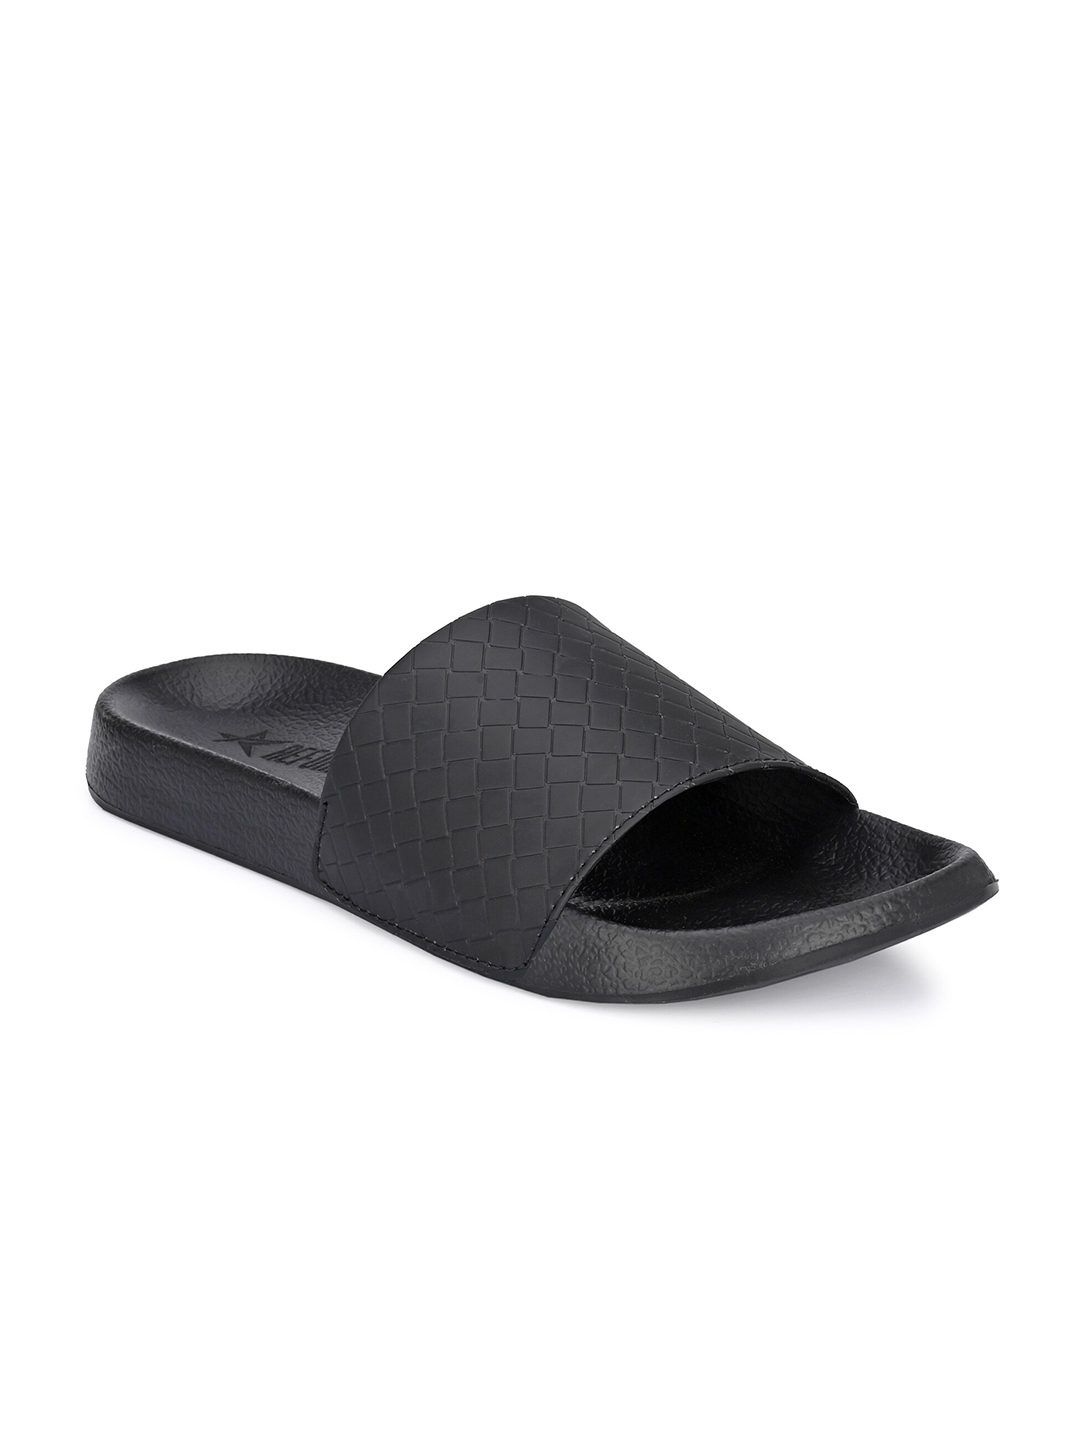 Buy REFOAM Men Black Rubber Sliders - Flip Flops for Men 15962714 | Myntra